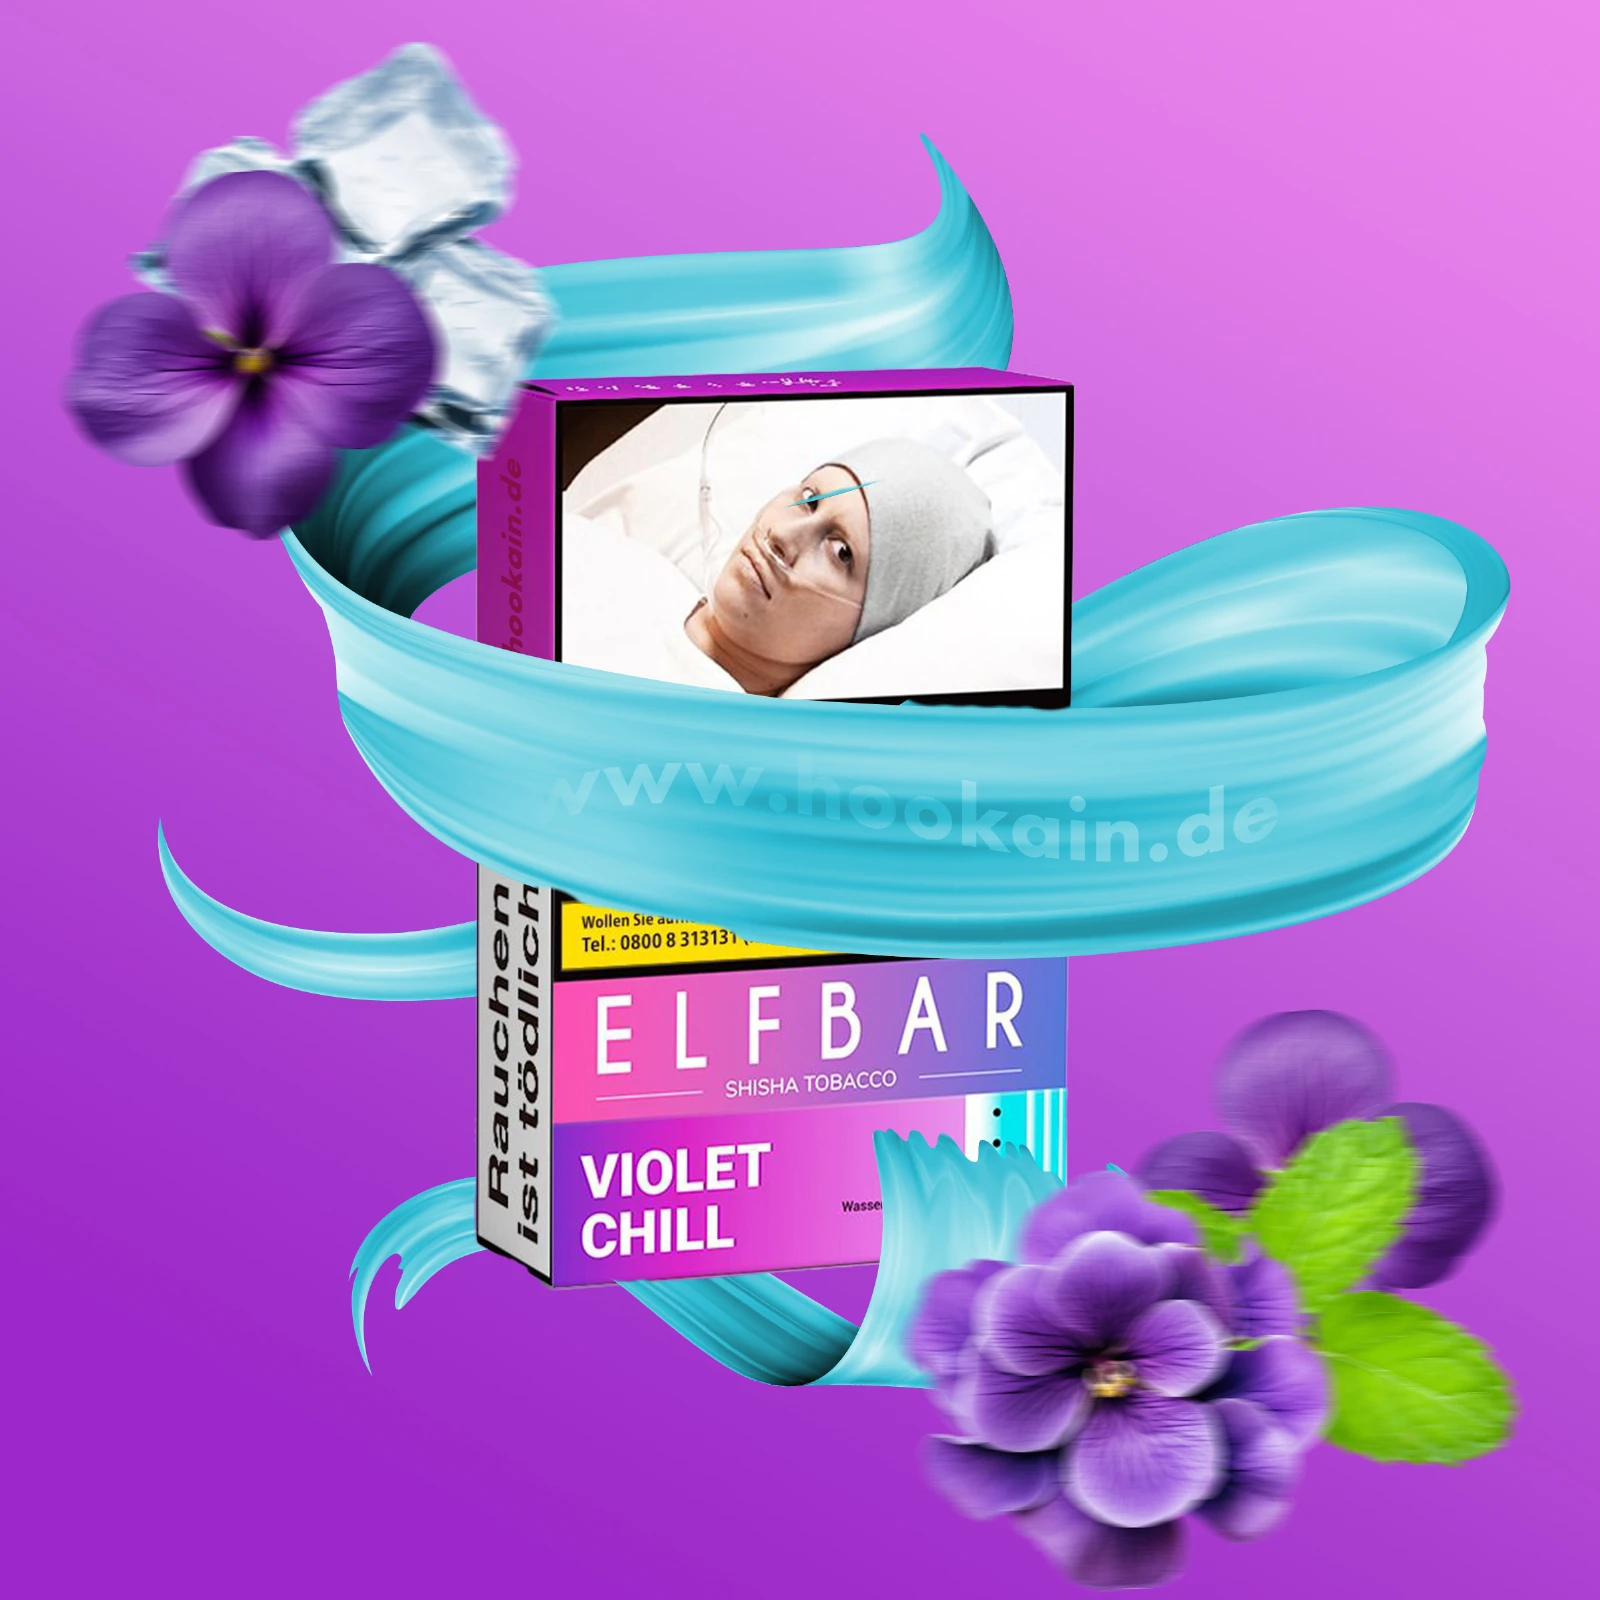 Elf Bar Tobacco Violet Chill: Shisha Tabak mit Vape Geschmack